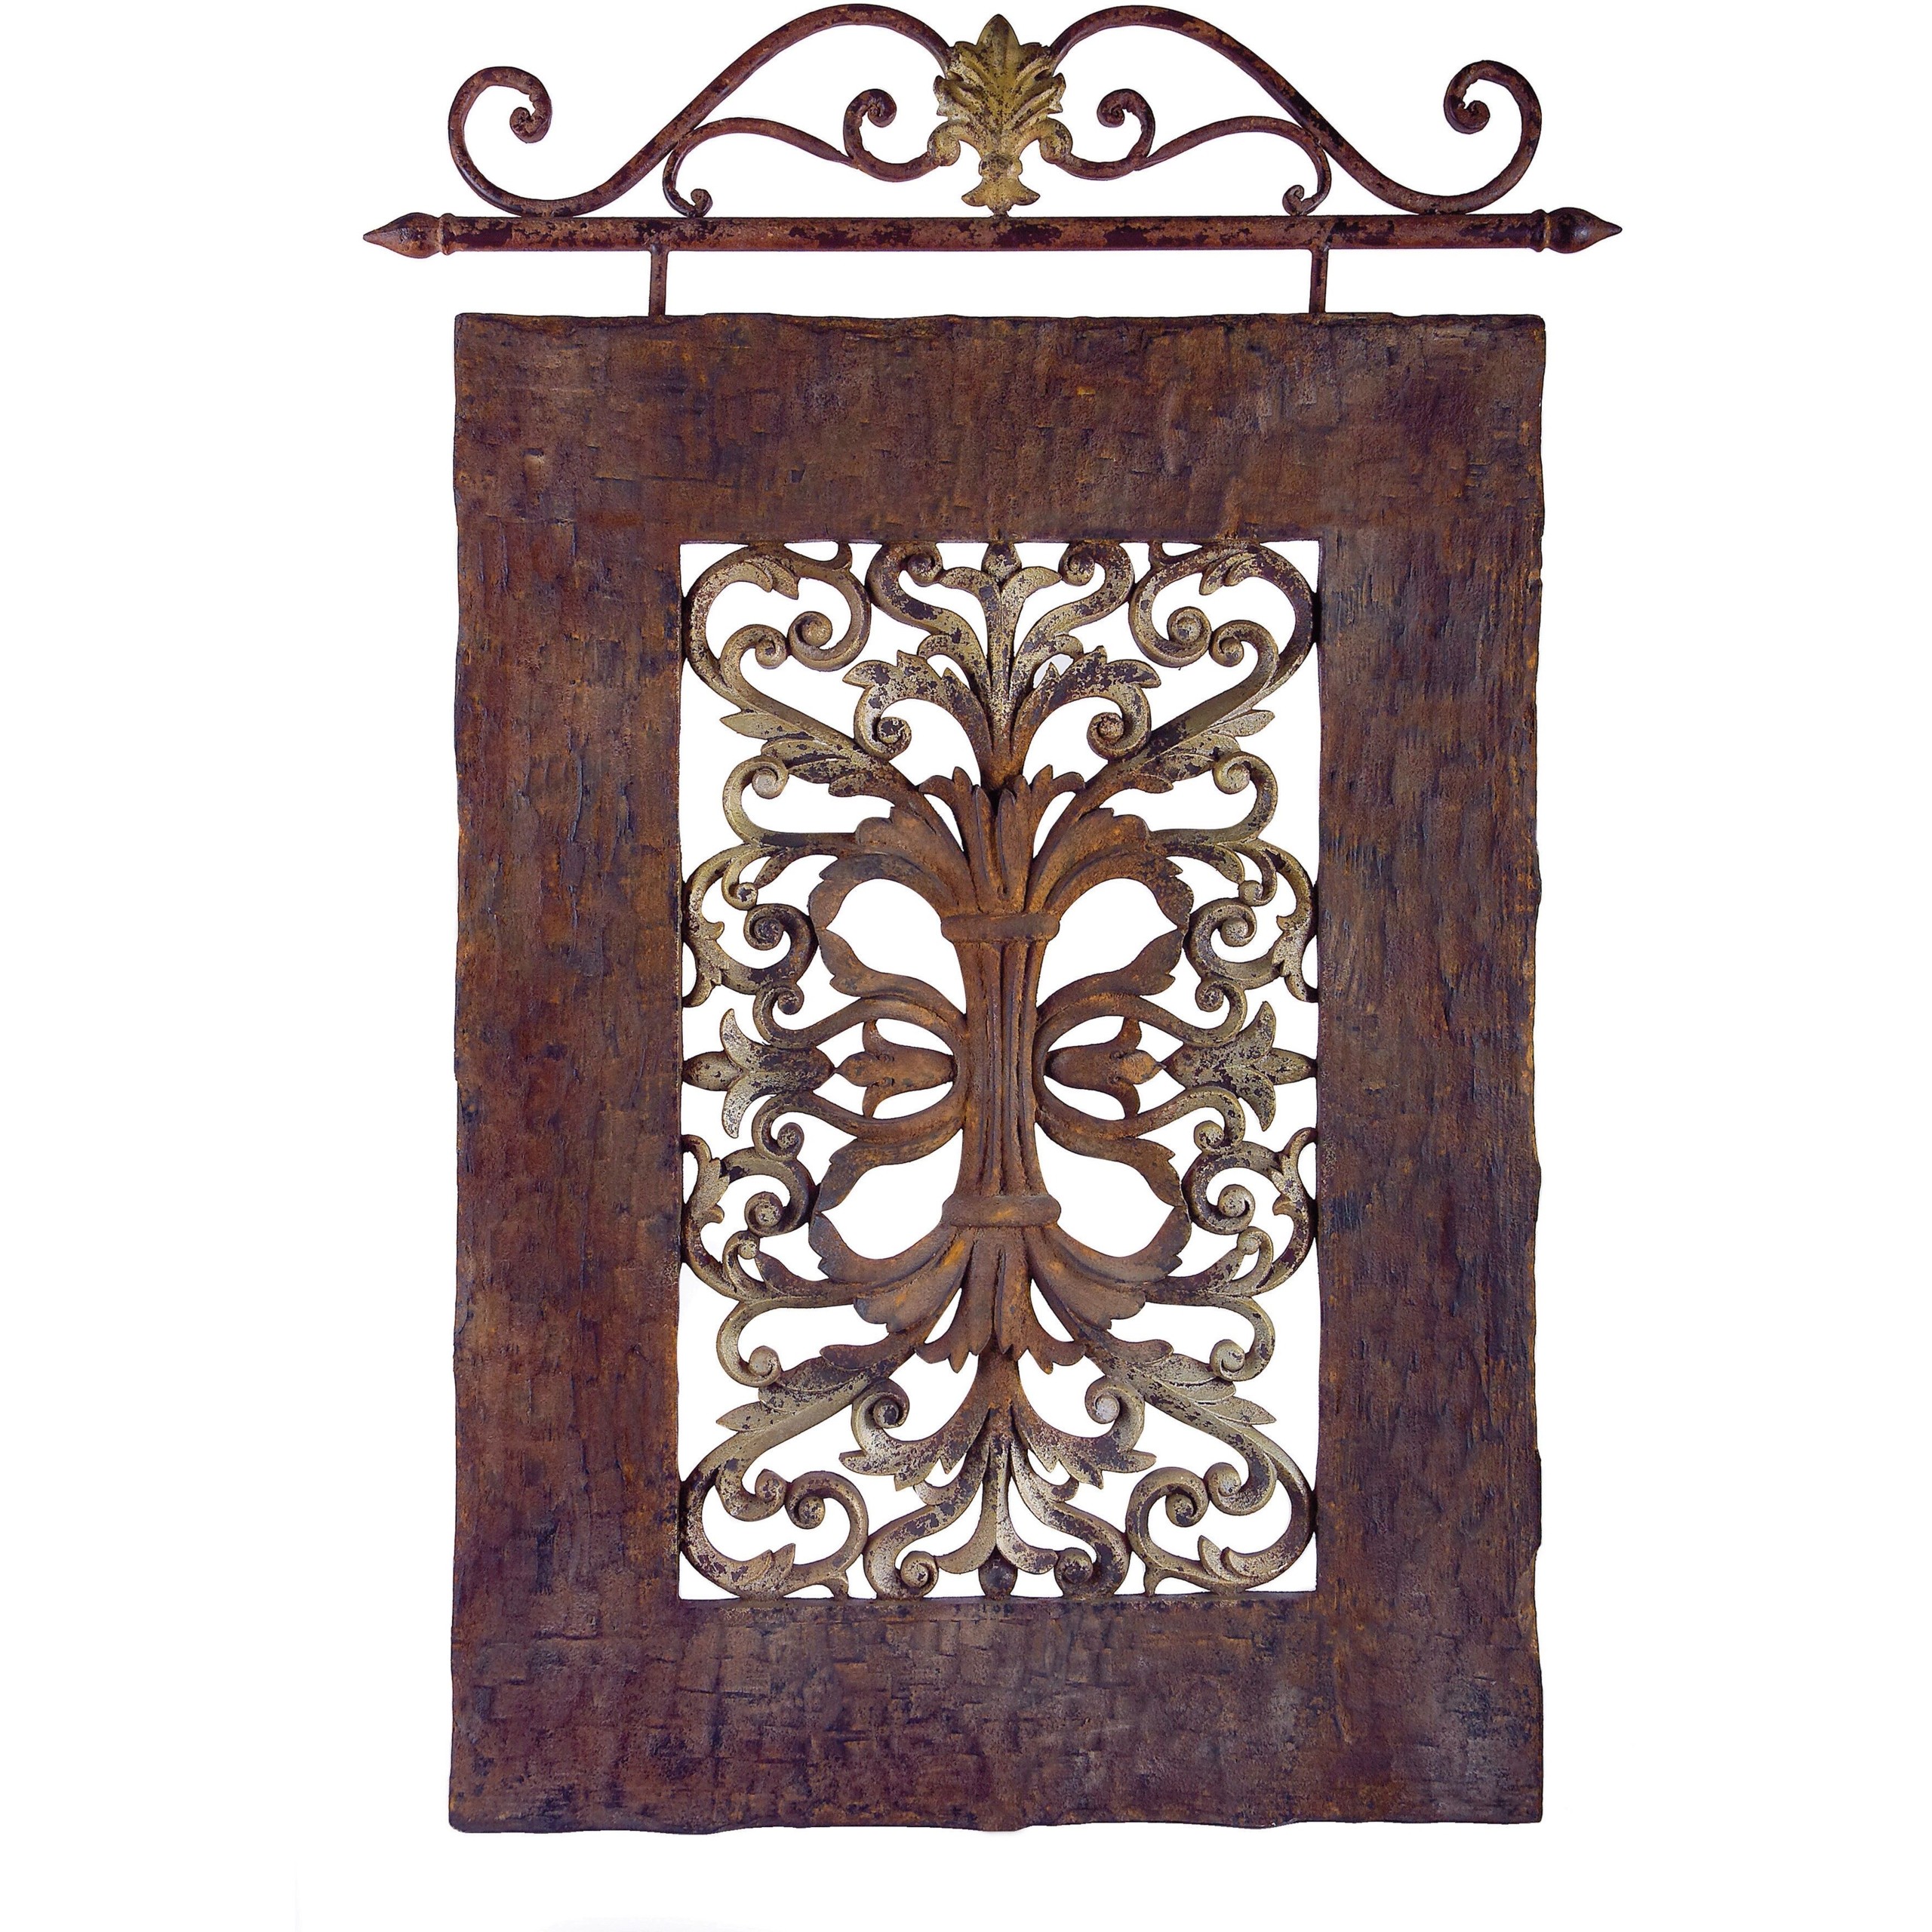 Tuscan brown intricate scroll iron city gate hanging panel wall